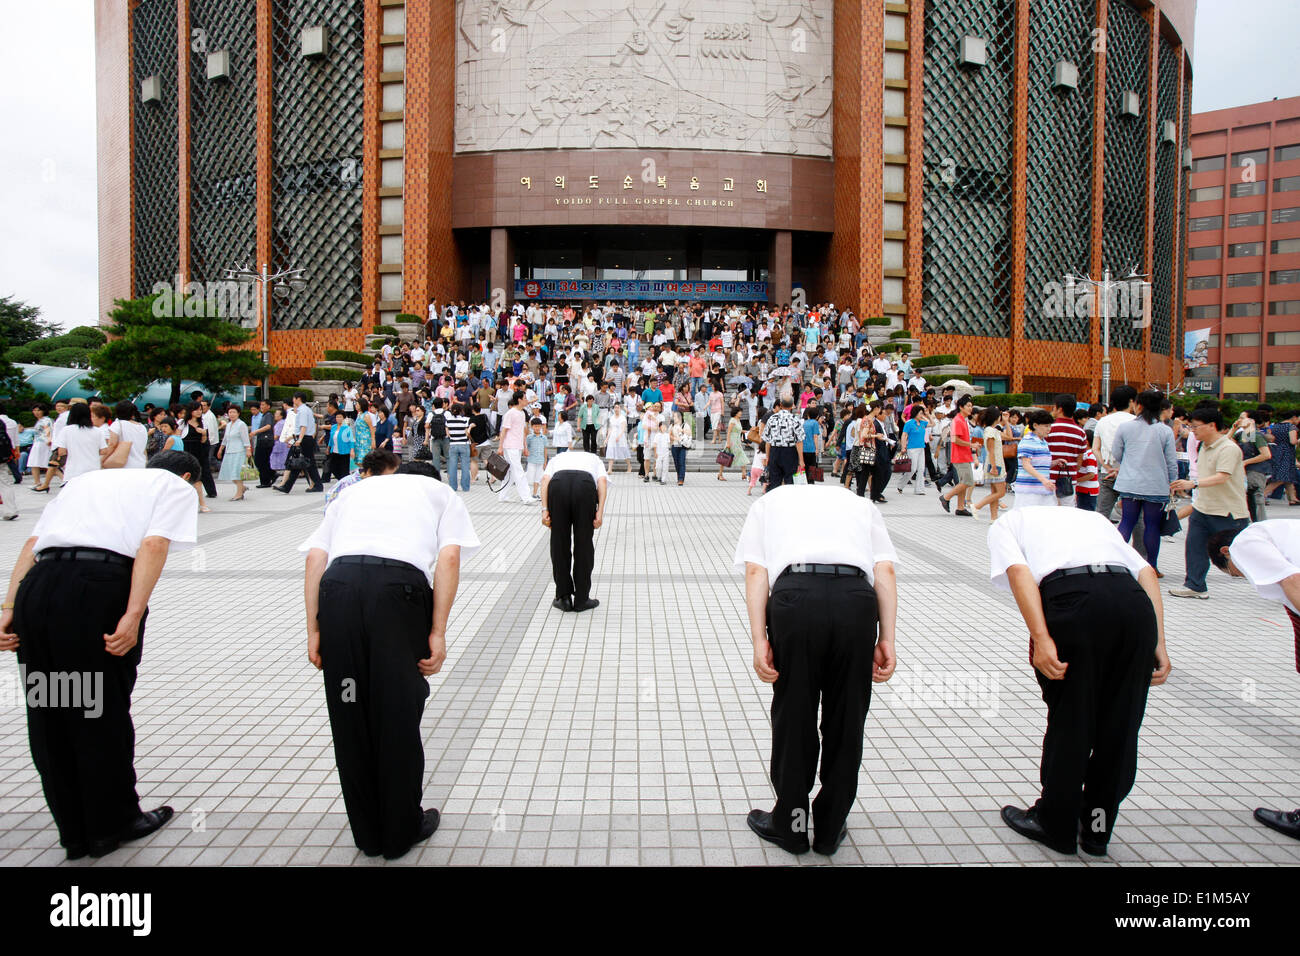 Yoido Full Gospel Church, the largest megachurch in the world. South Korea. Stock Photo